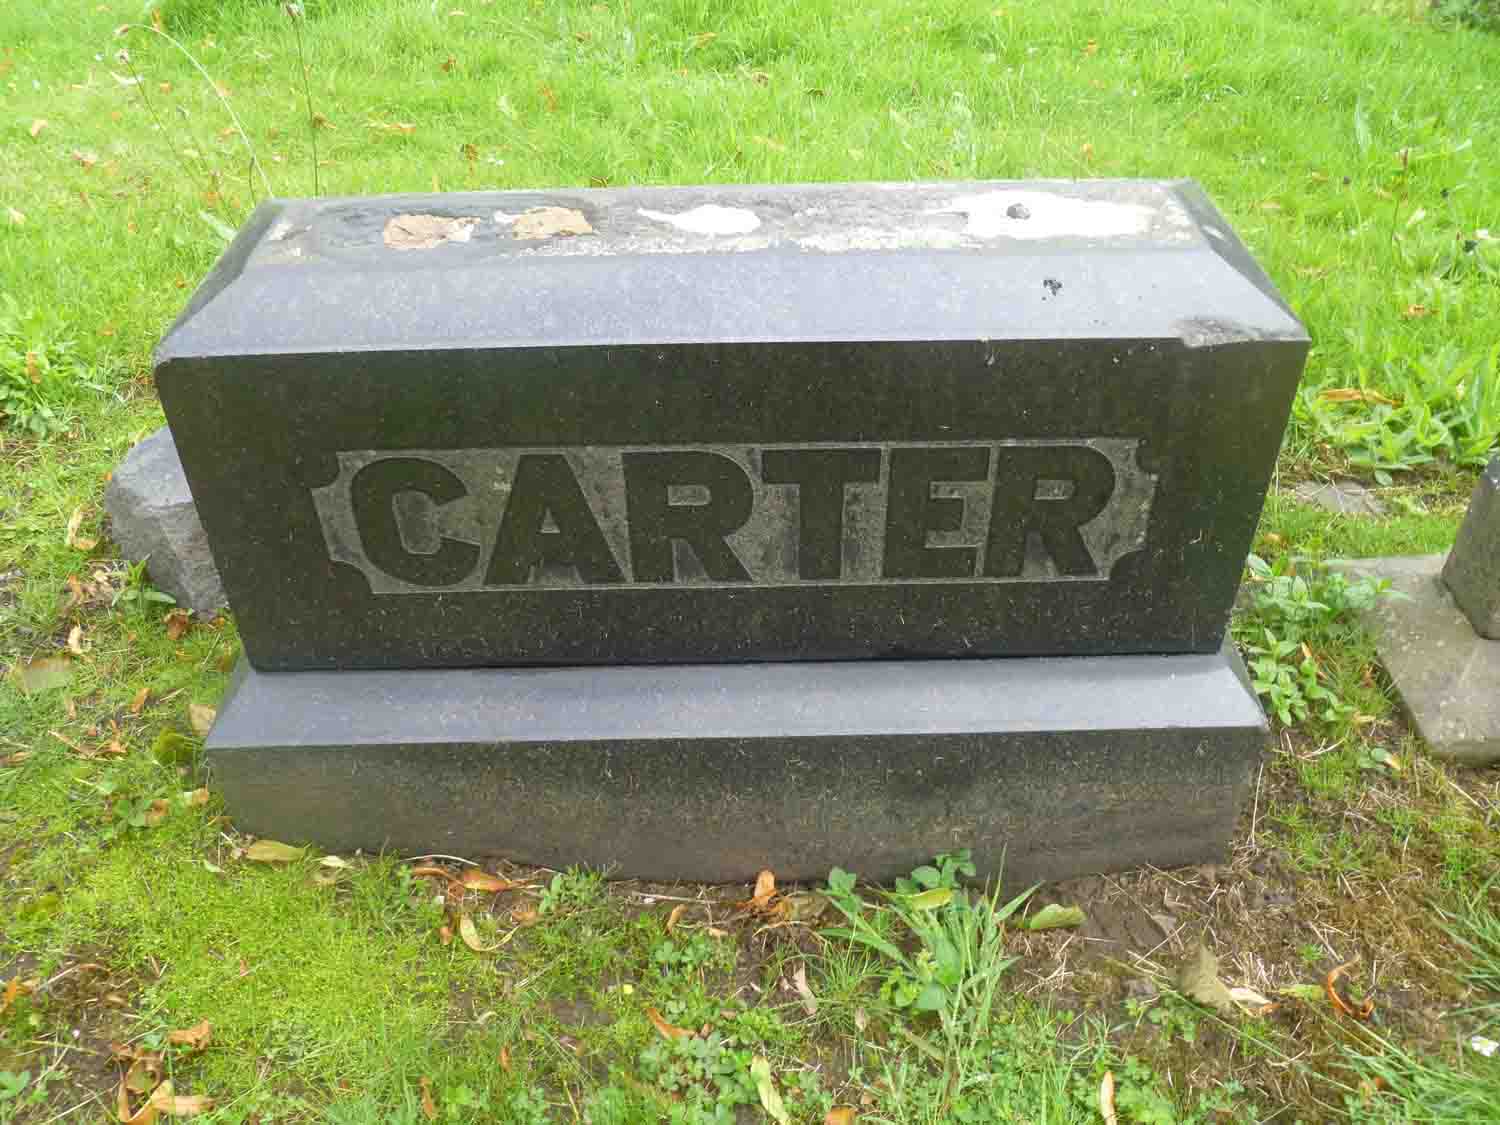 Carter (1 421)